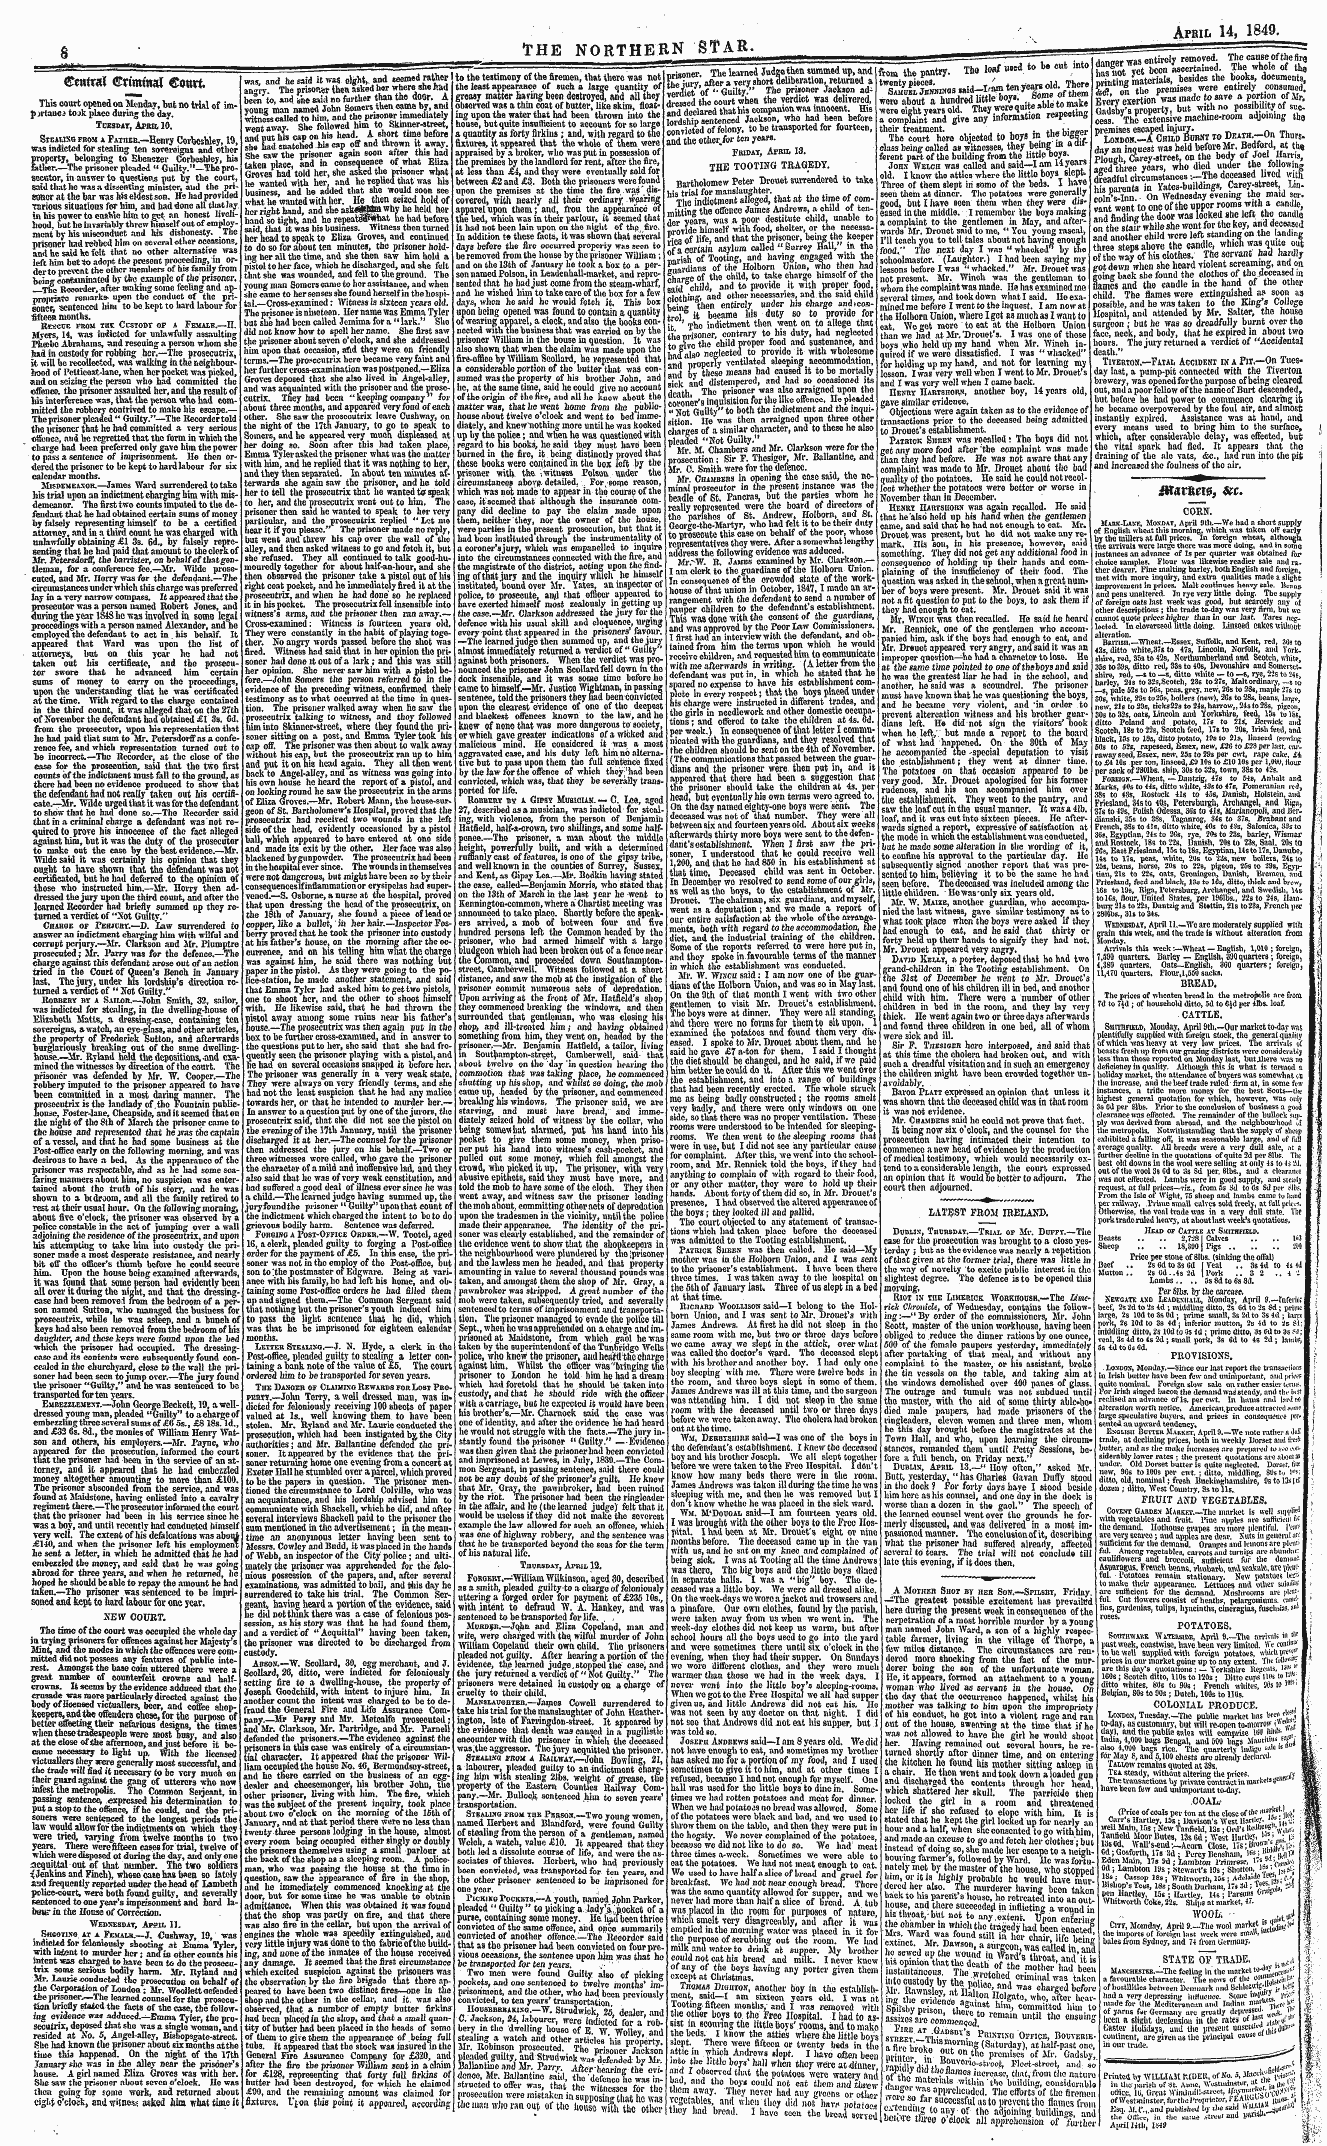 Northern Star (1837-1852): jS F Y, 3rd edition - ©Entral Crttminal €&Lt;Wtt